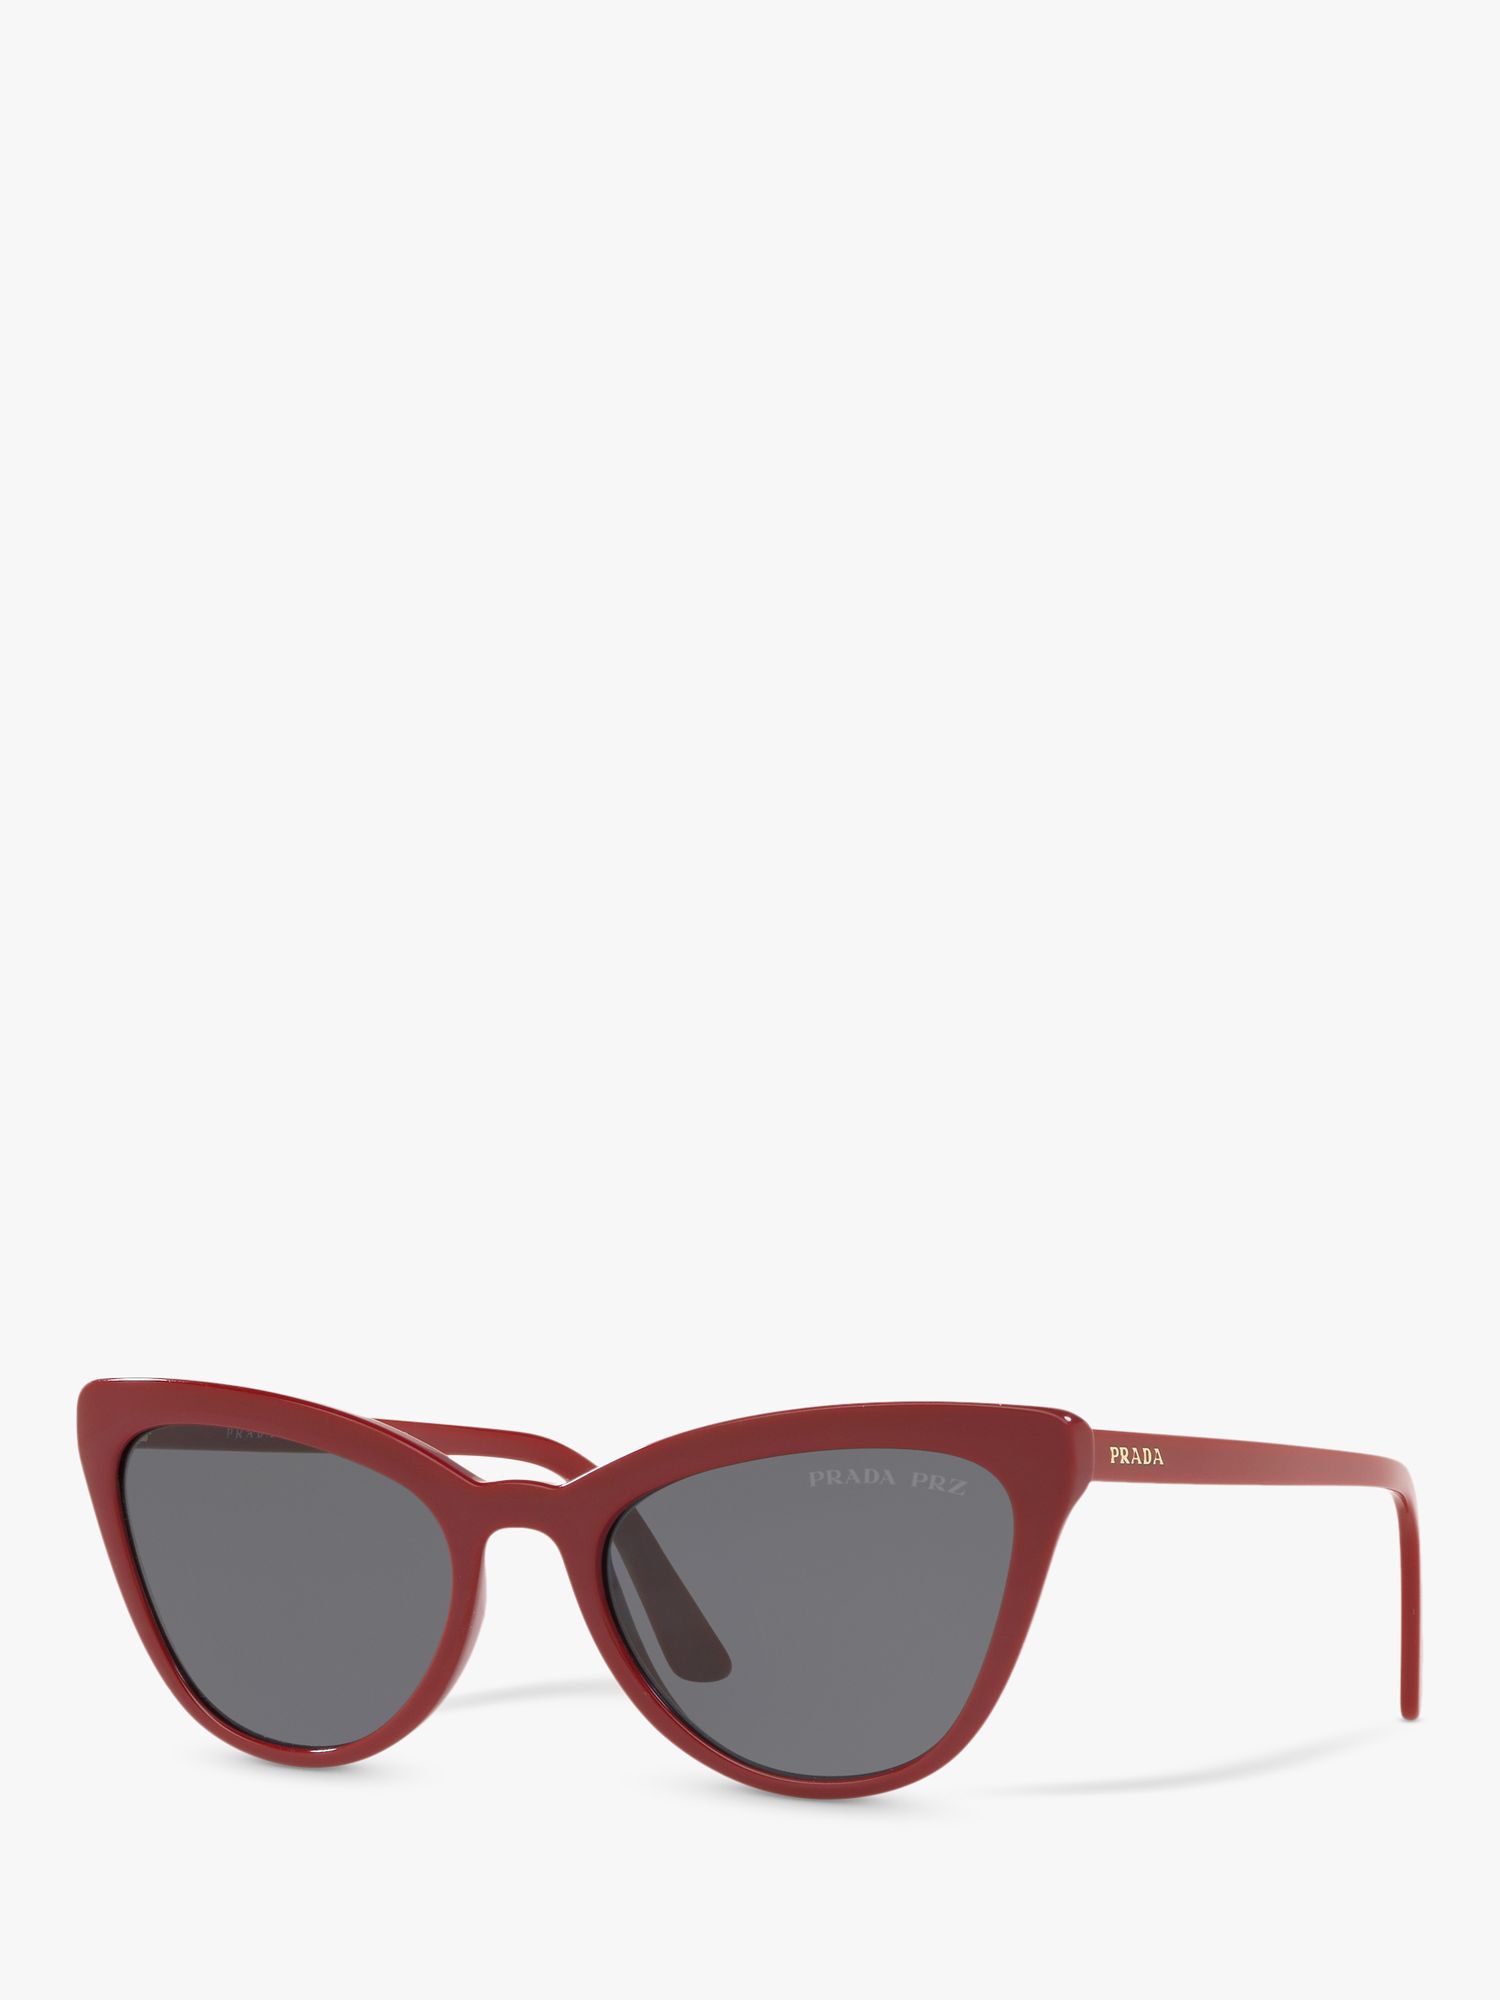 prada cat eye sunglasses 2019